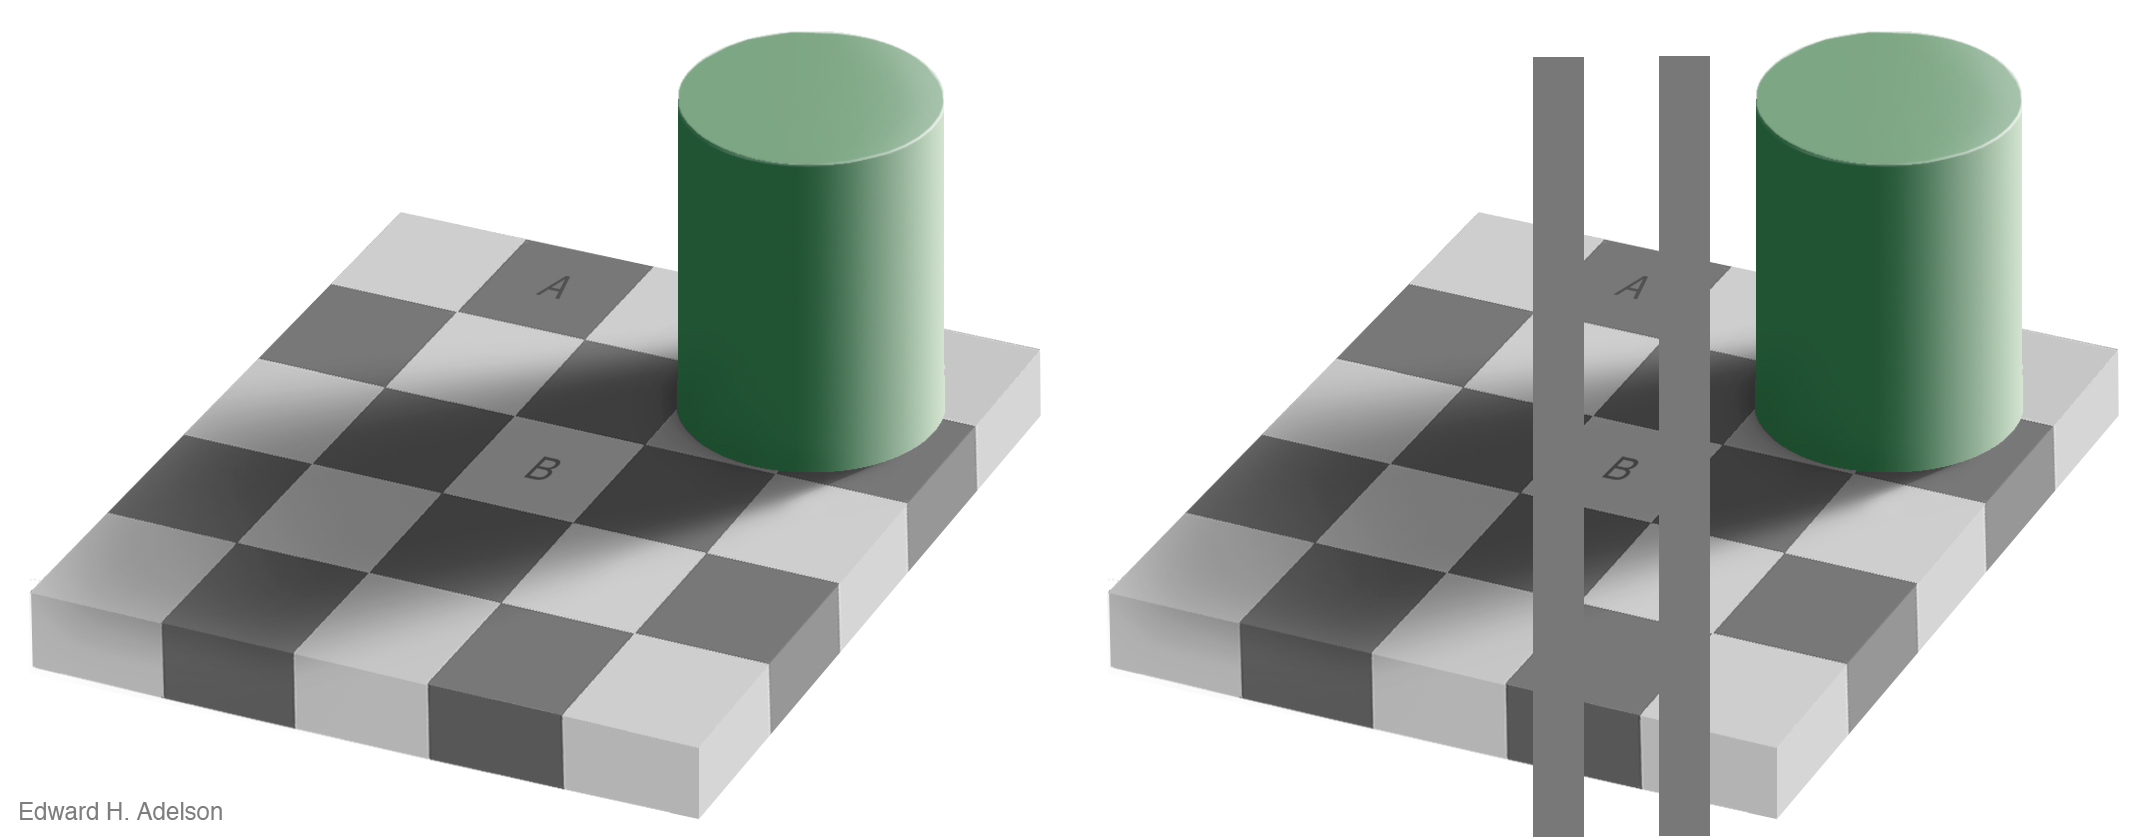 The checkershadow illusion (Edward H. Adelson).